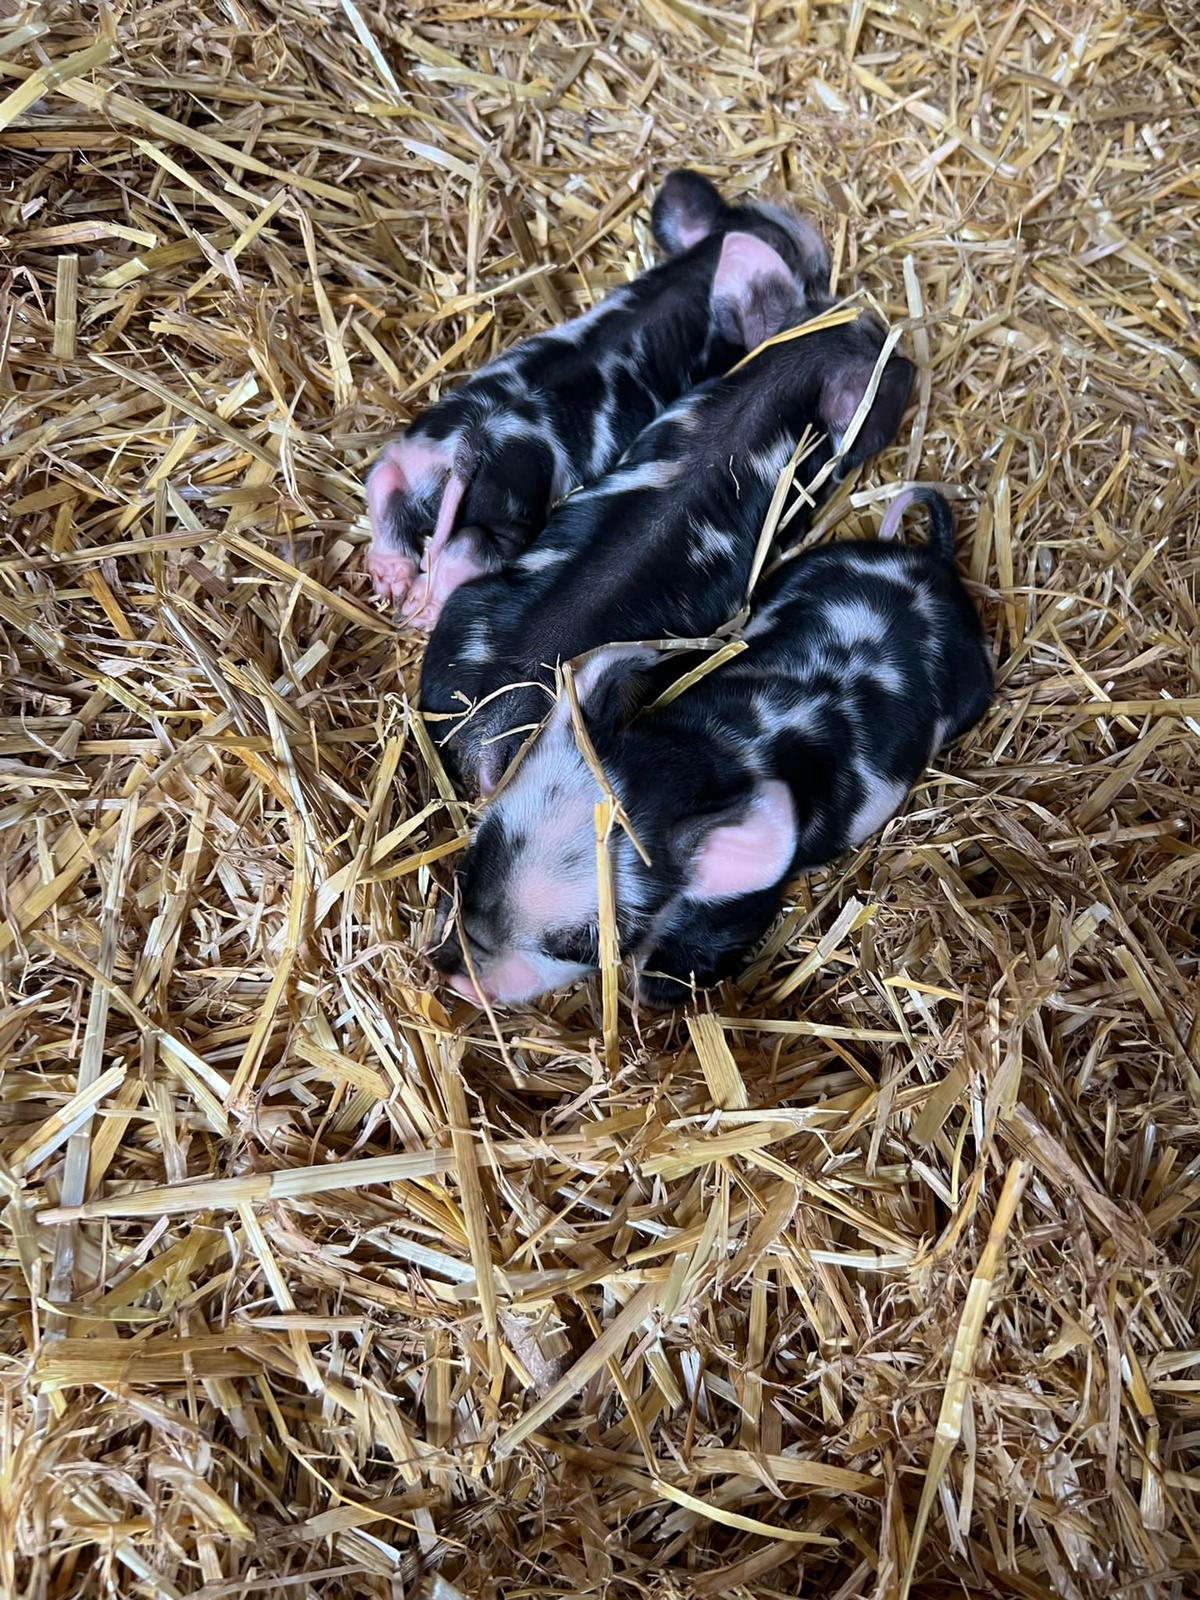 Tiny new born piglets in straw at barnyard